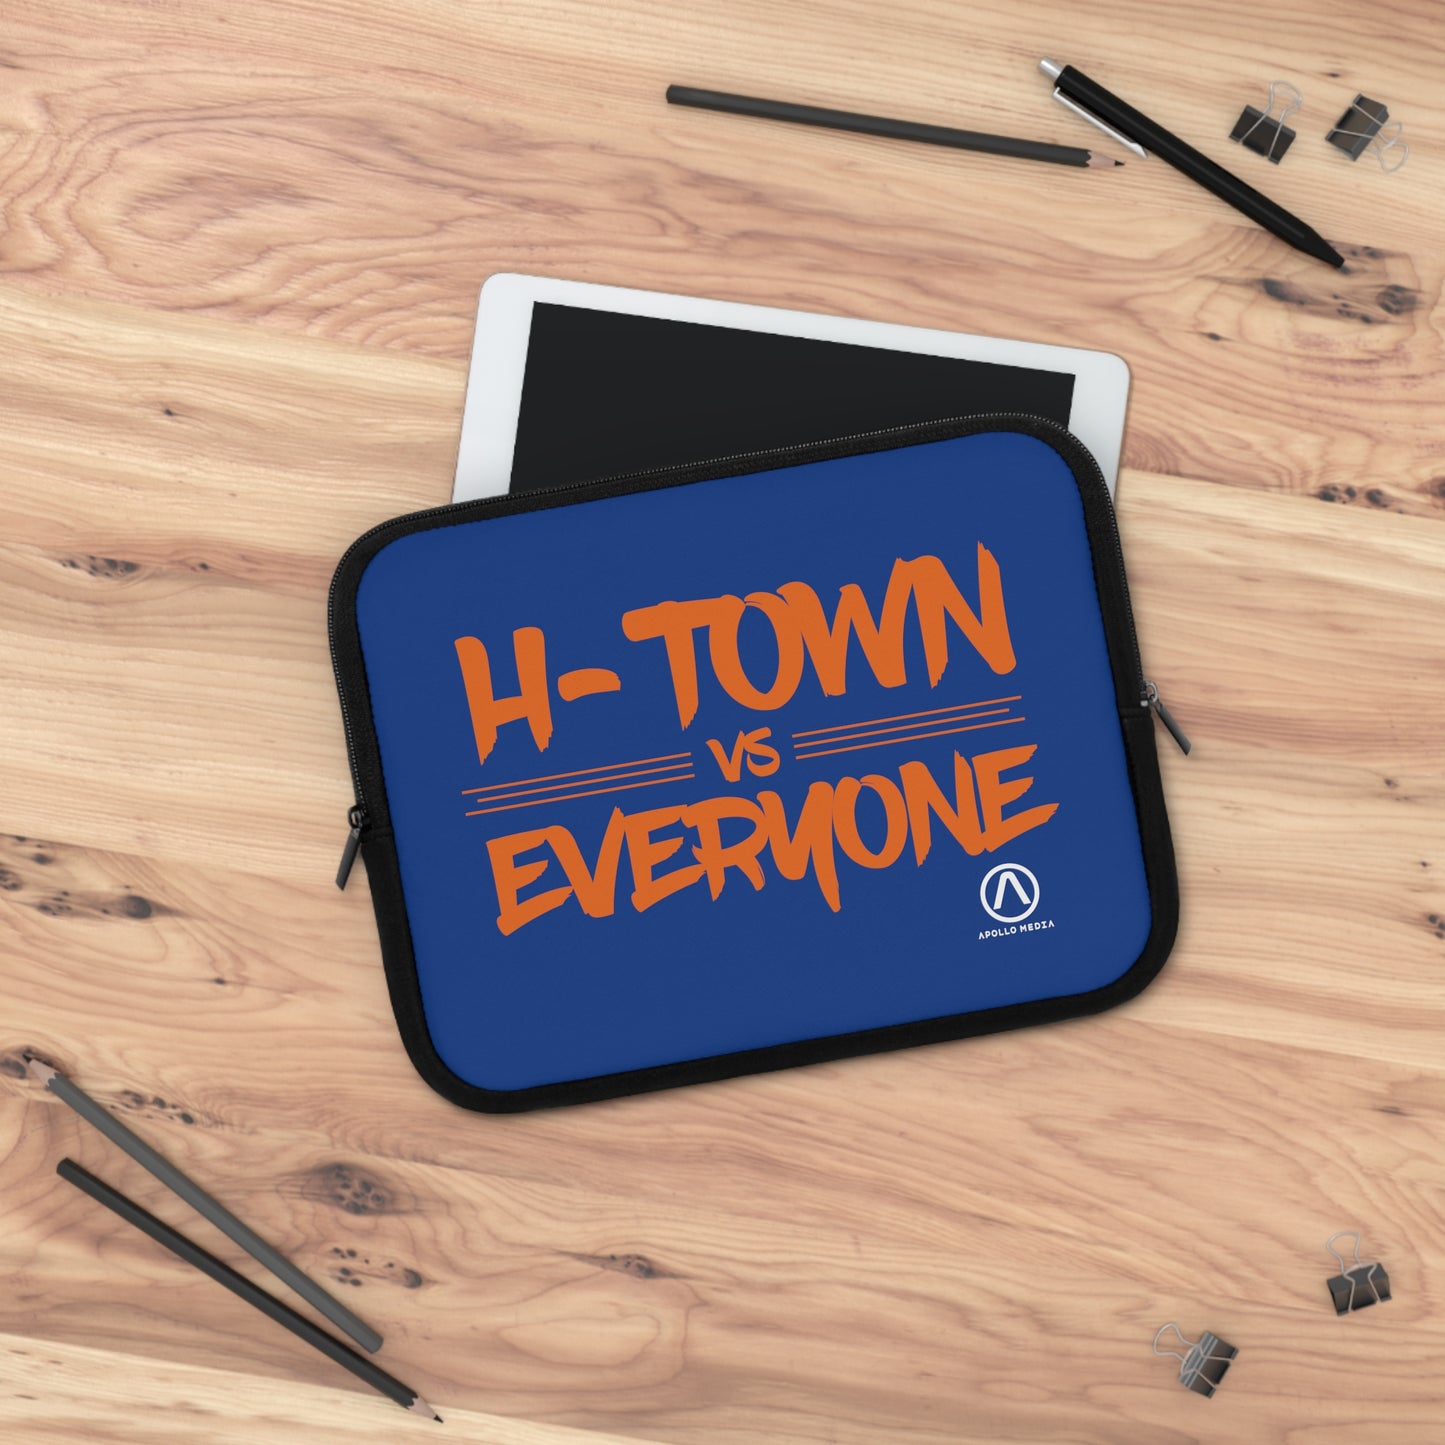 H-Town vs Everyone Laptop Sleeve - Orange